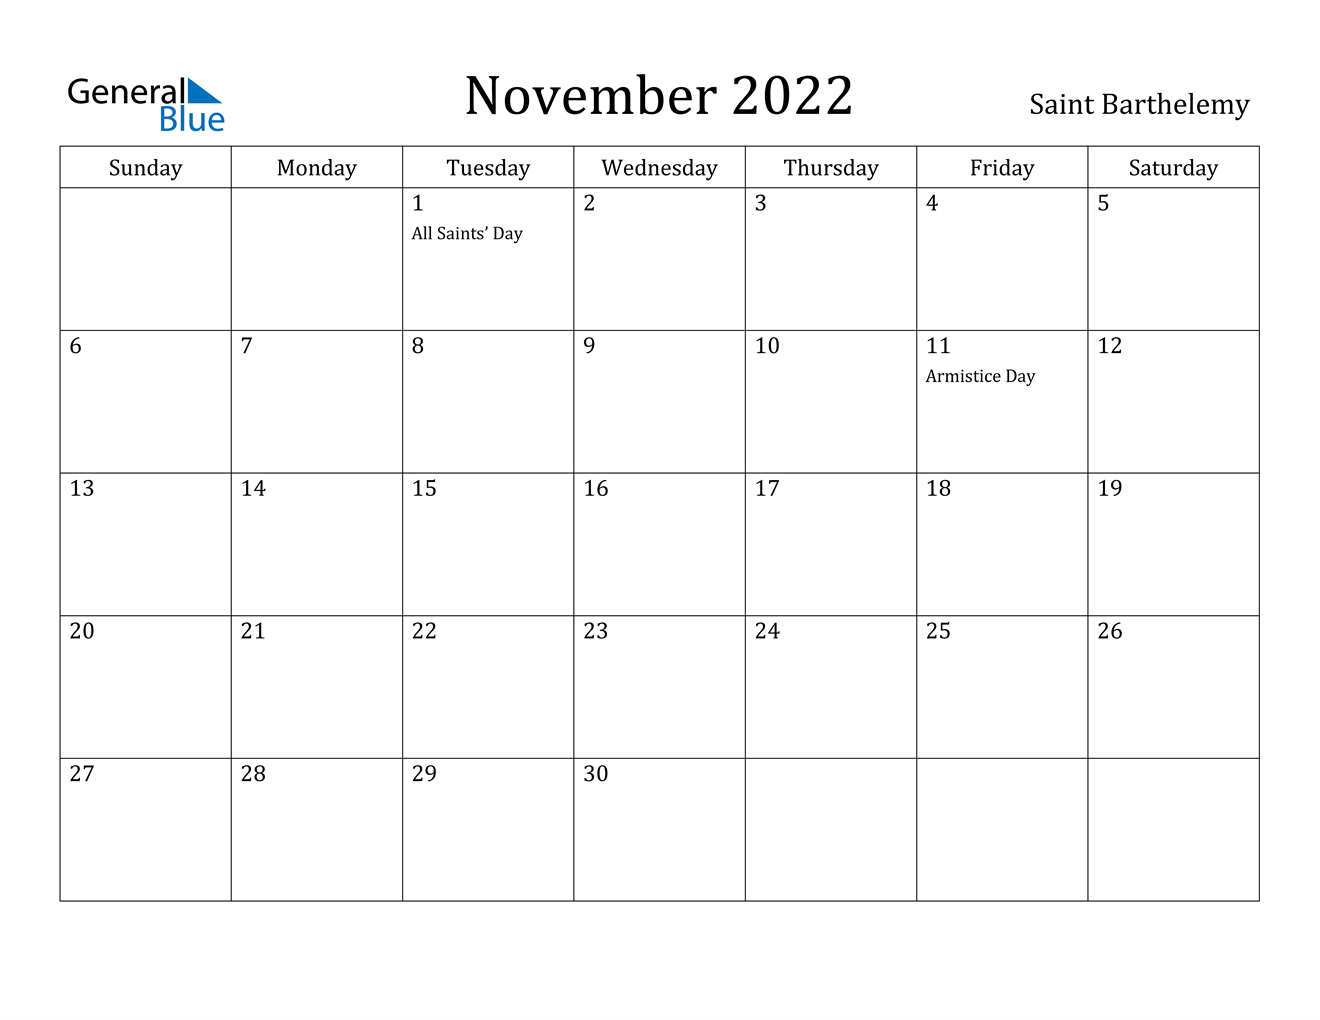 November 2022 Calendar - Saint Barthelemy